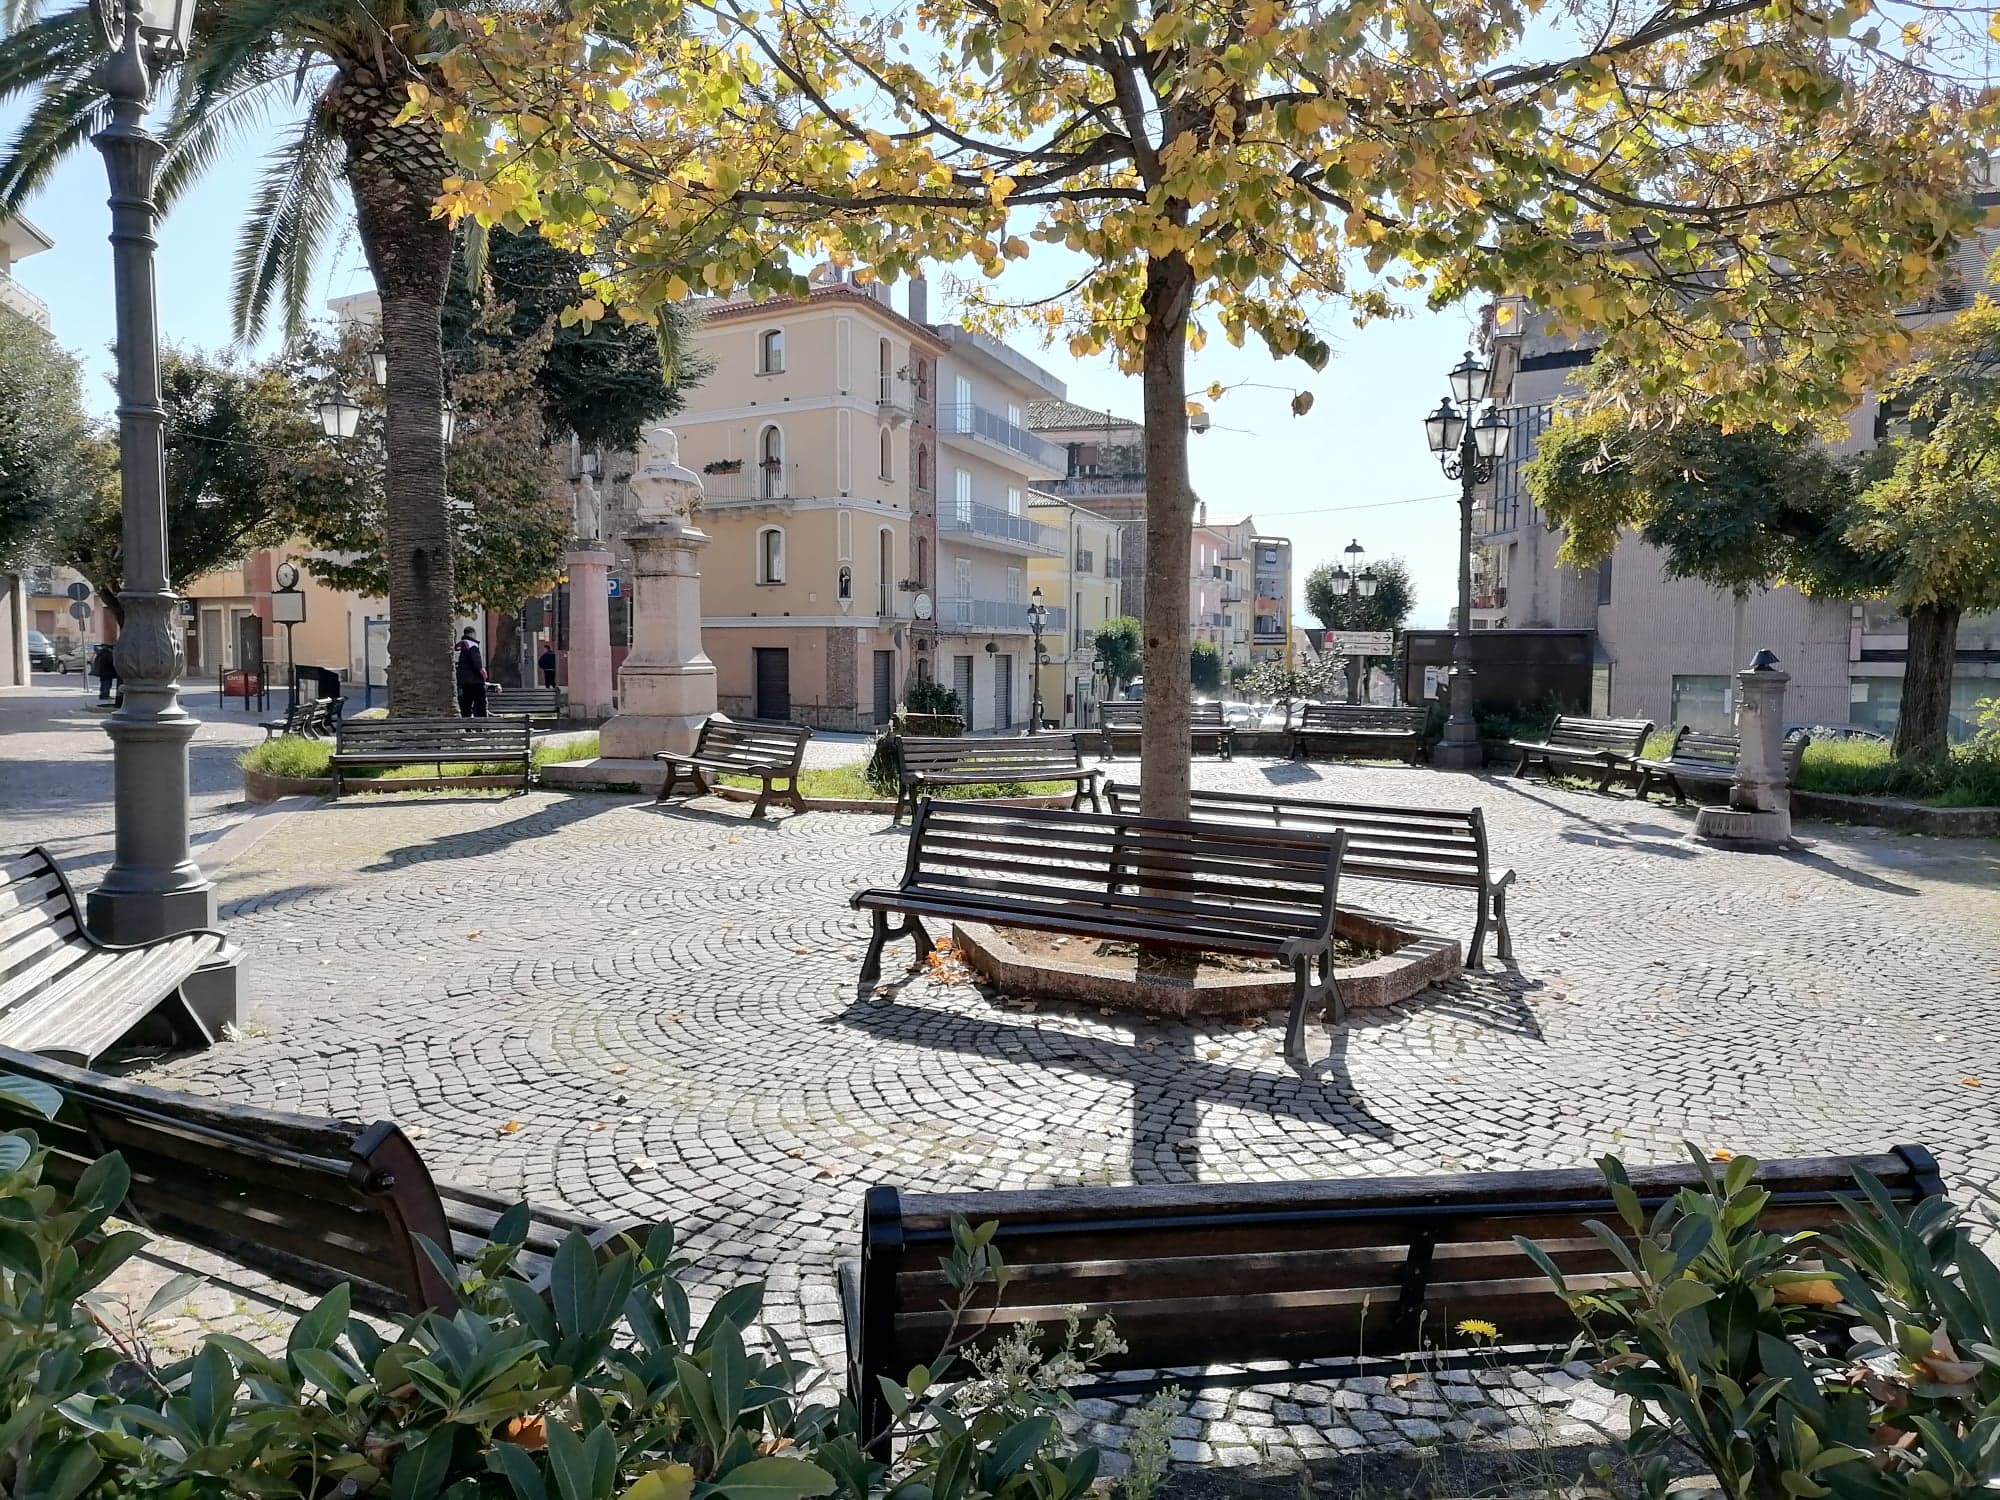 Piazze Covid-19: piazza Fiorentino di Lamezia Terme (VIDEO)